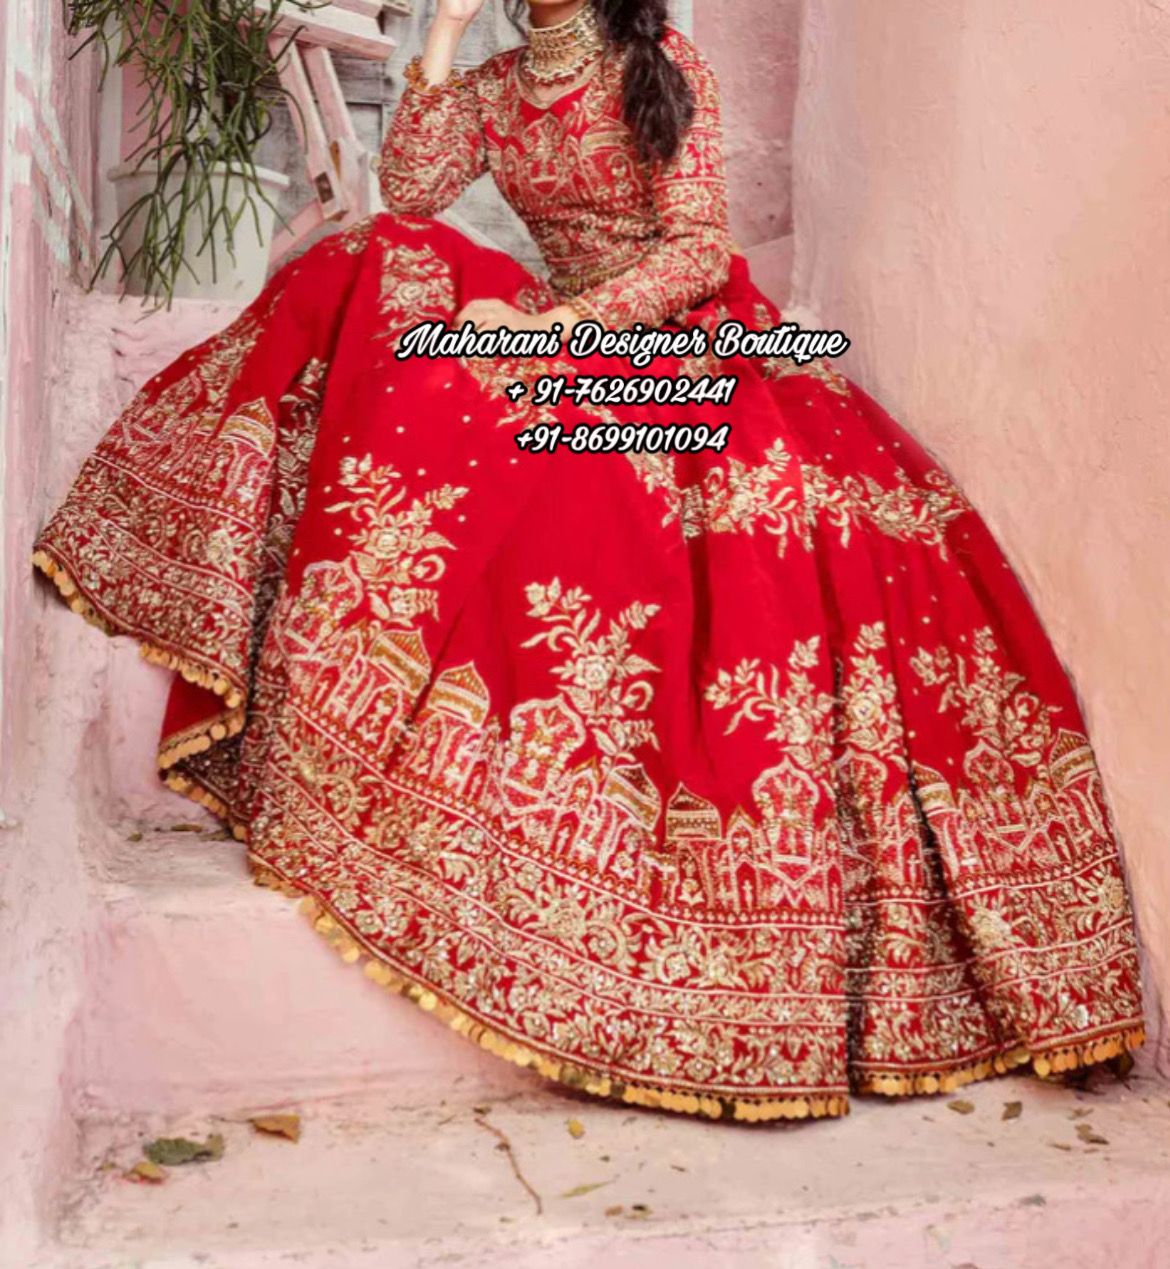 Telugu Actress Pragya Jaiswal Inspired Hottest Lehenga Blouse Designs |  Trendy Lehenga Blouse | Hot Blouse Designs